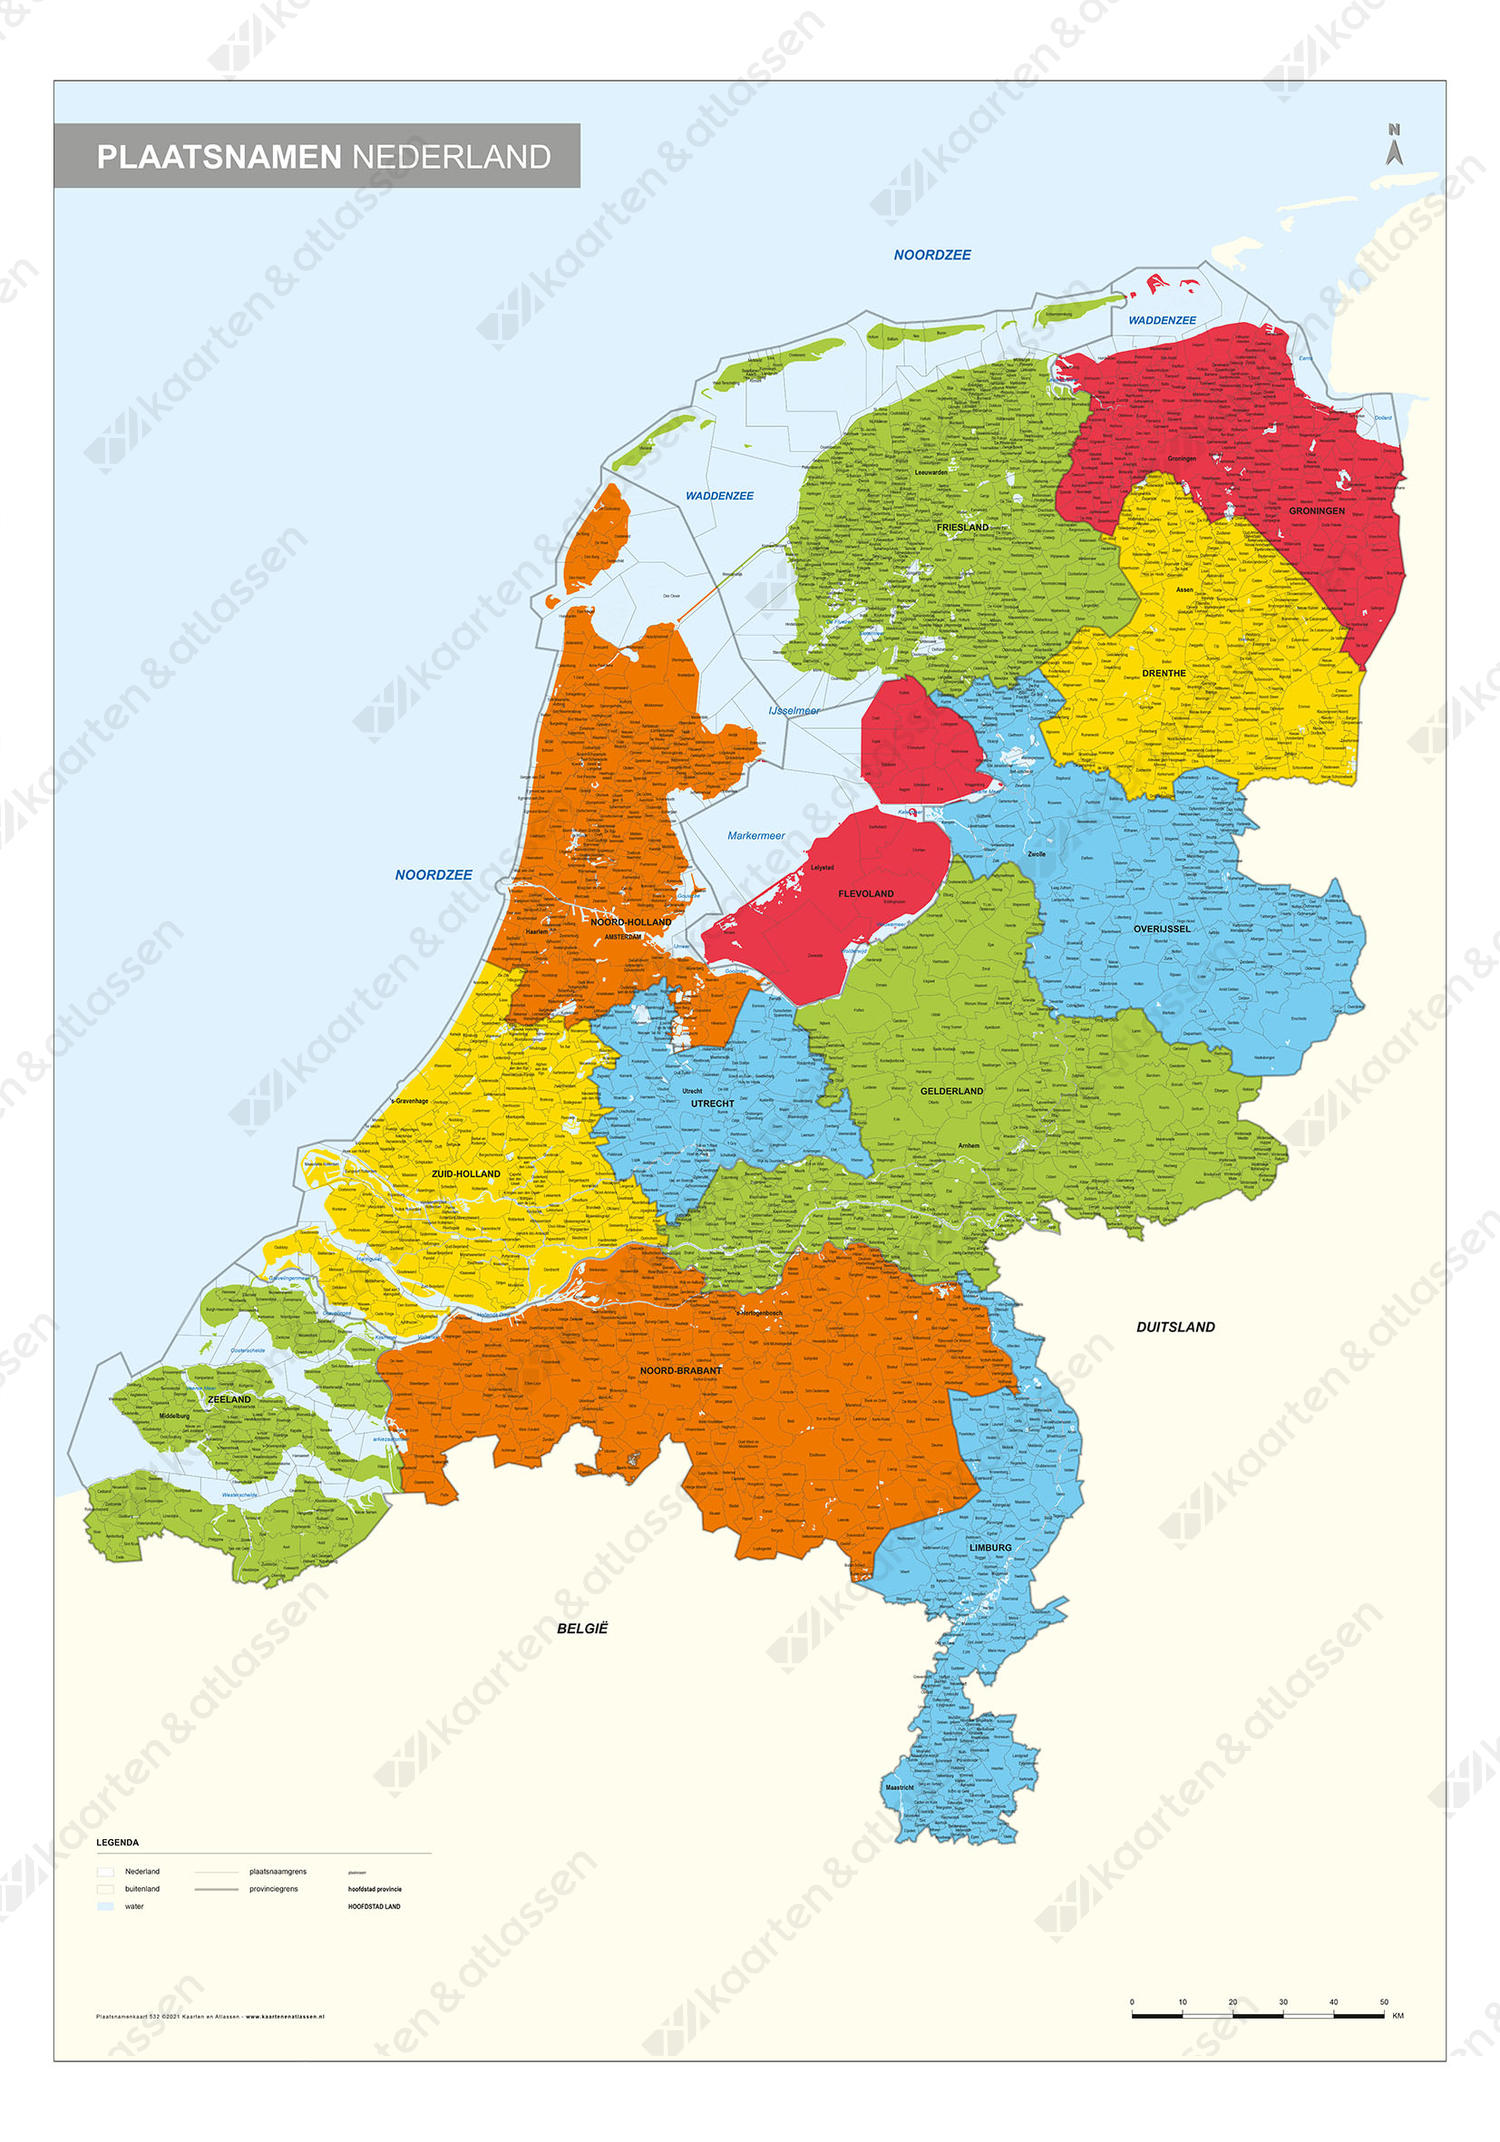 Digitale Plaatsnamenkaart Nederland